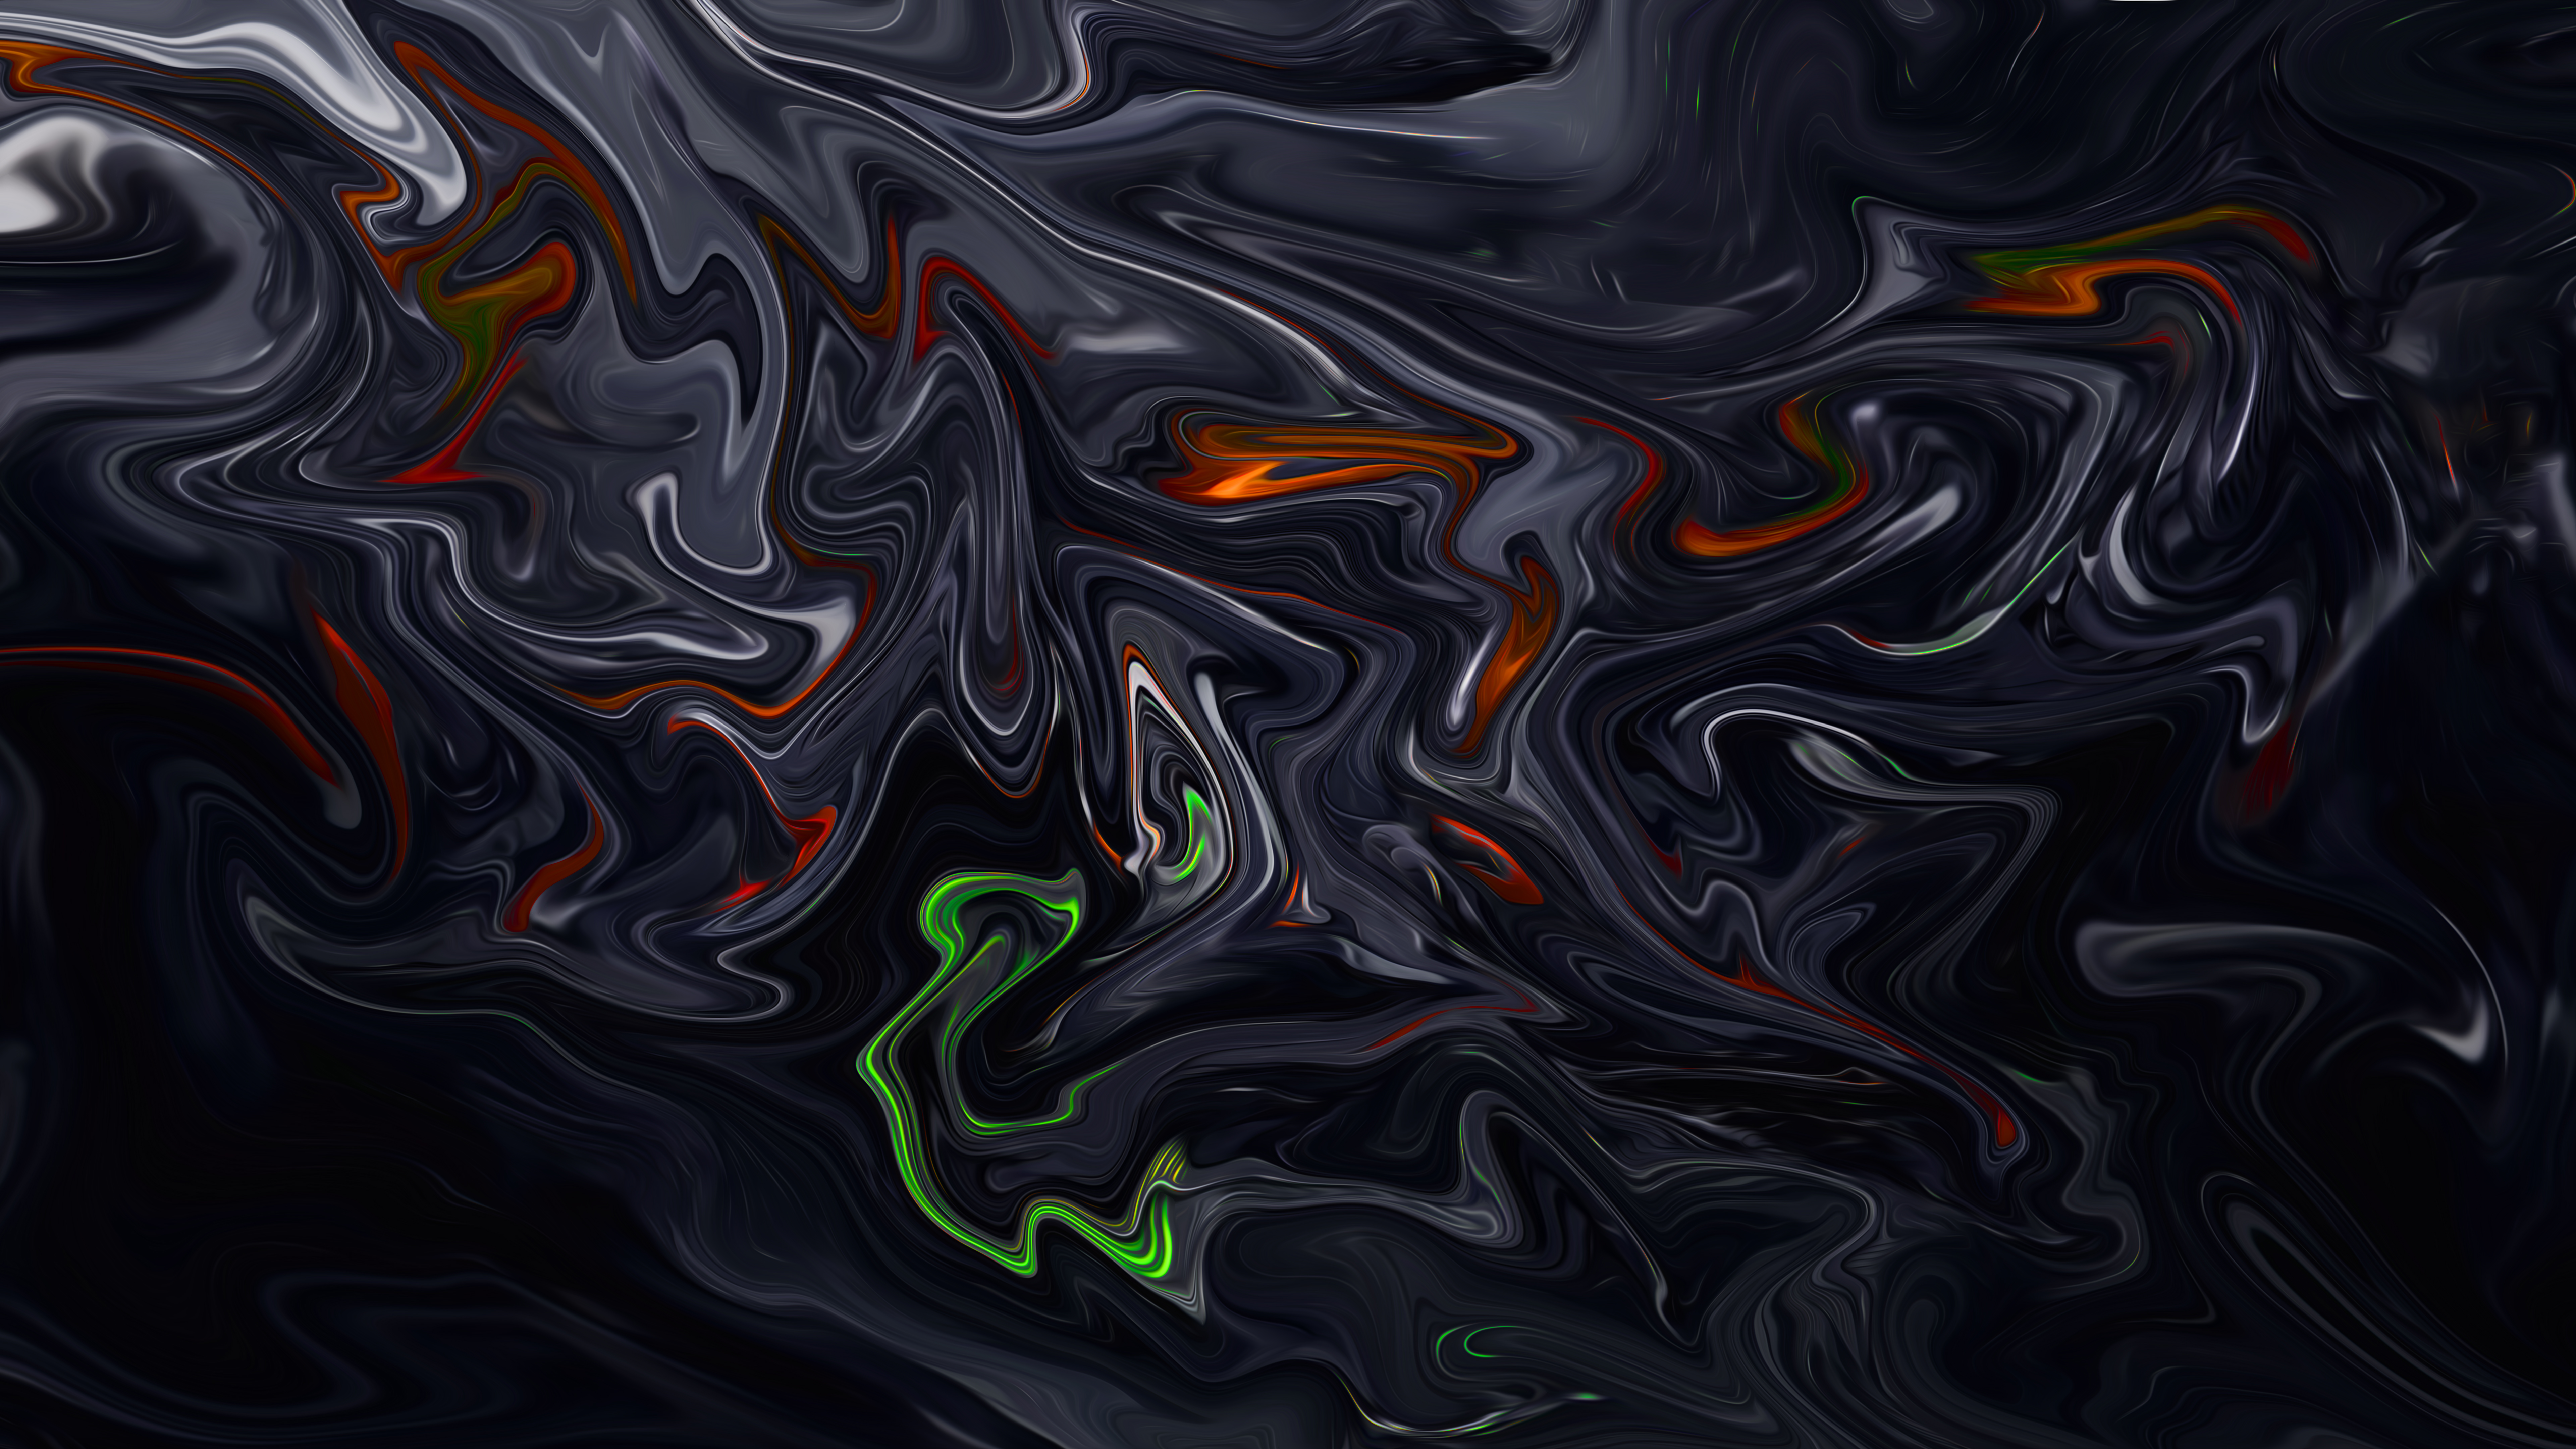 Abstract Fluid Liquid Colorful Artwork Digital Art Shapes Paint Brushes 8 K 7680x4320